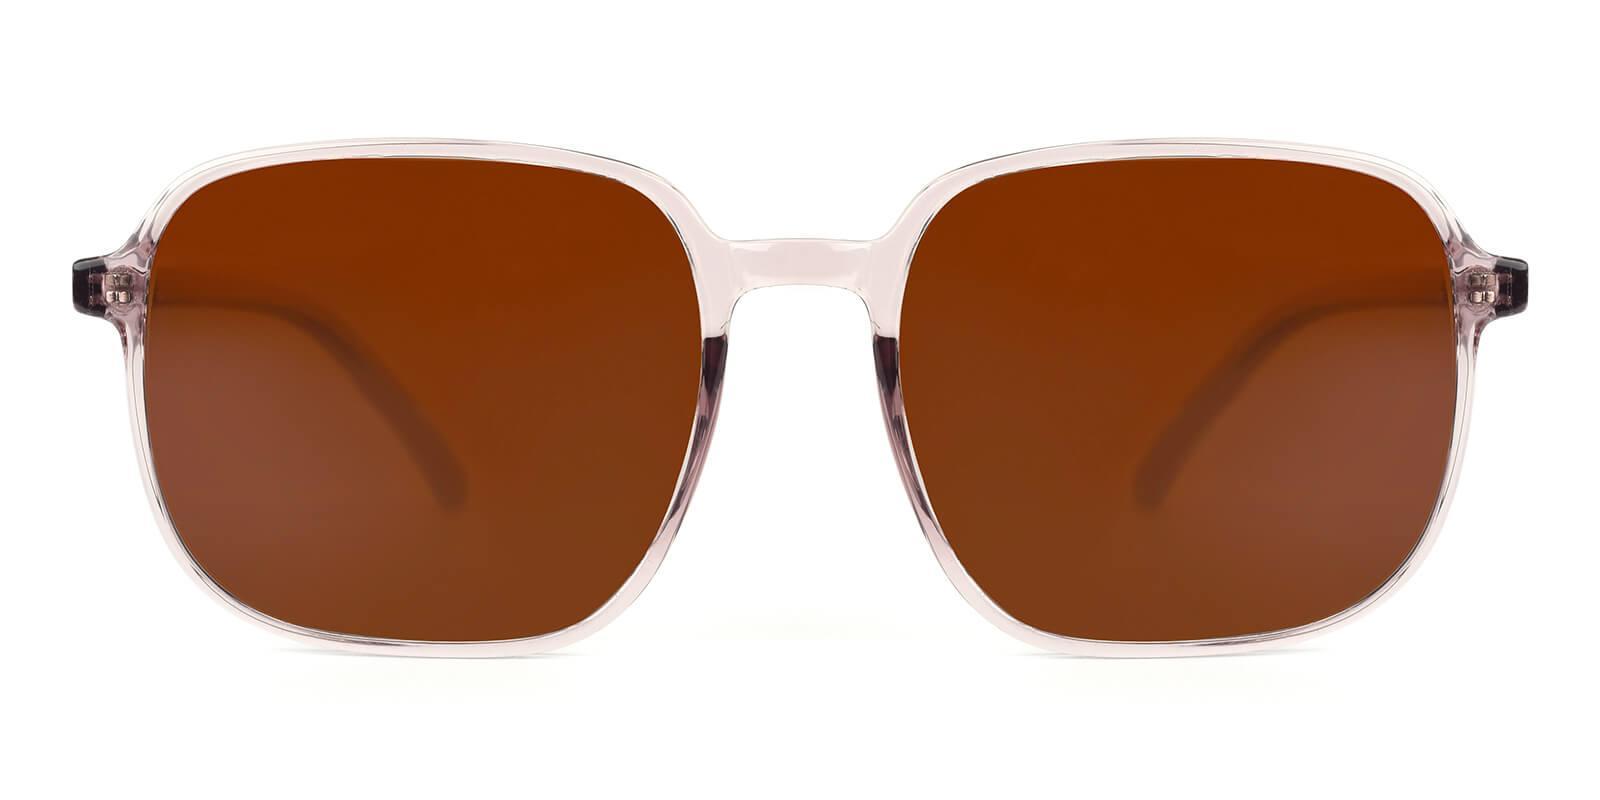 Terminal Purple TR Sunglasses , UniversalBridgeFit , Lightweight Frames from ABBE Glasses